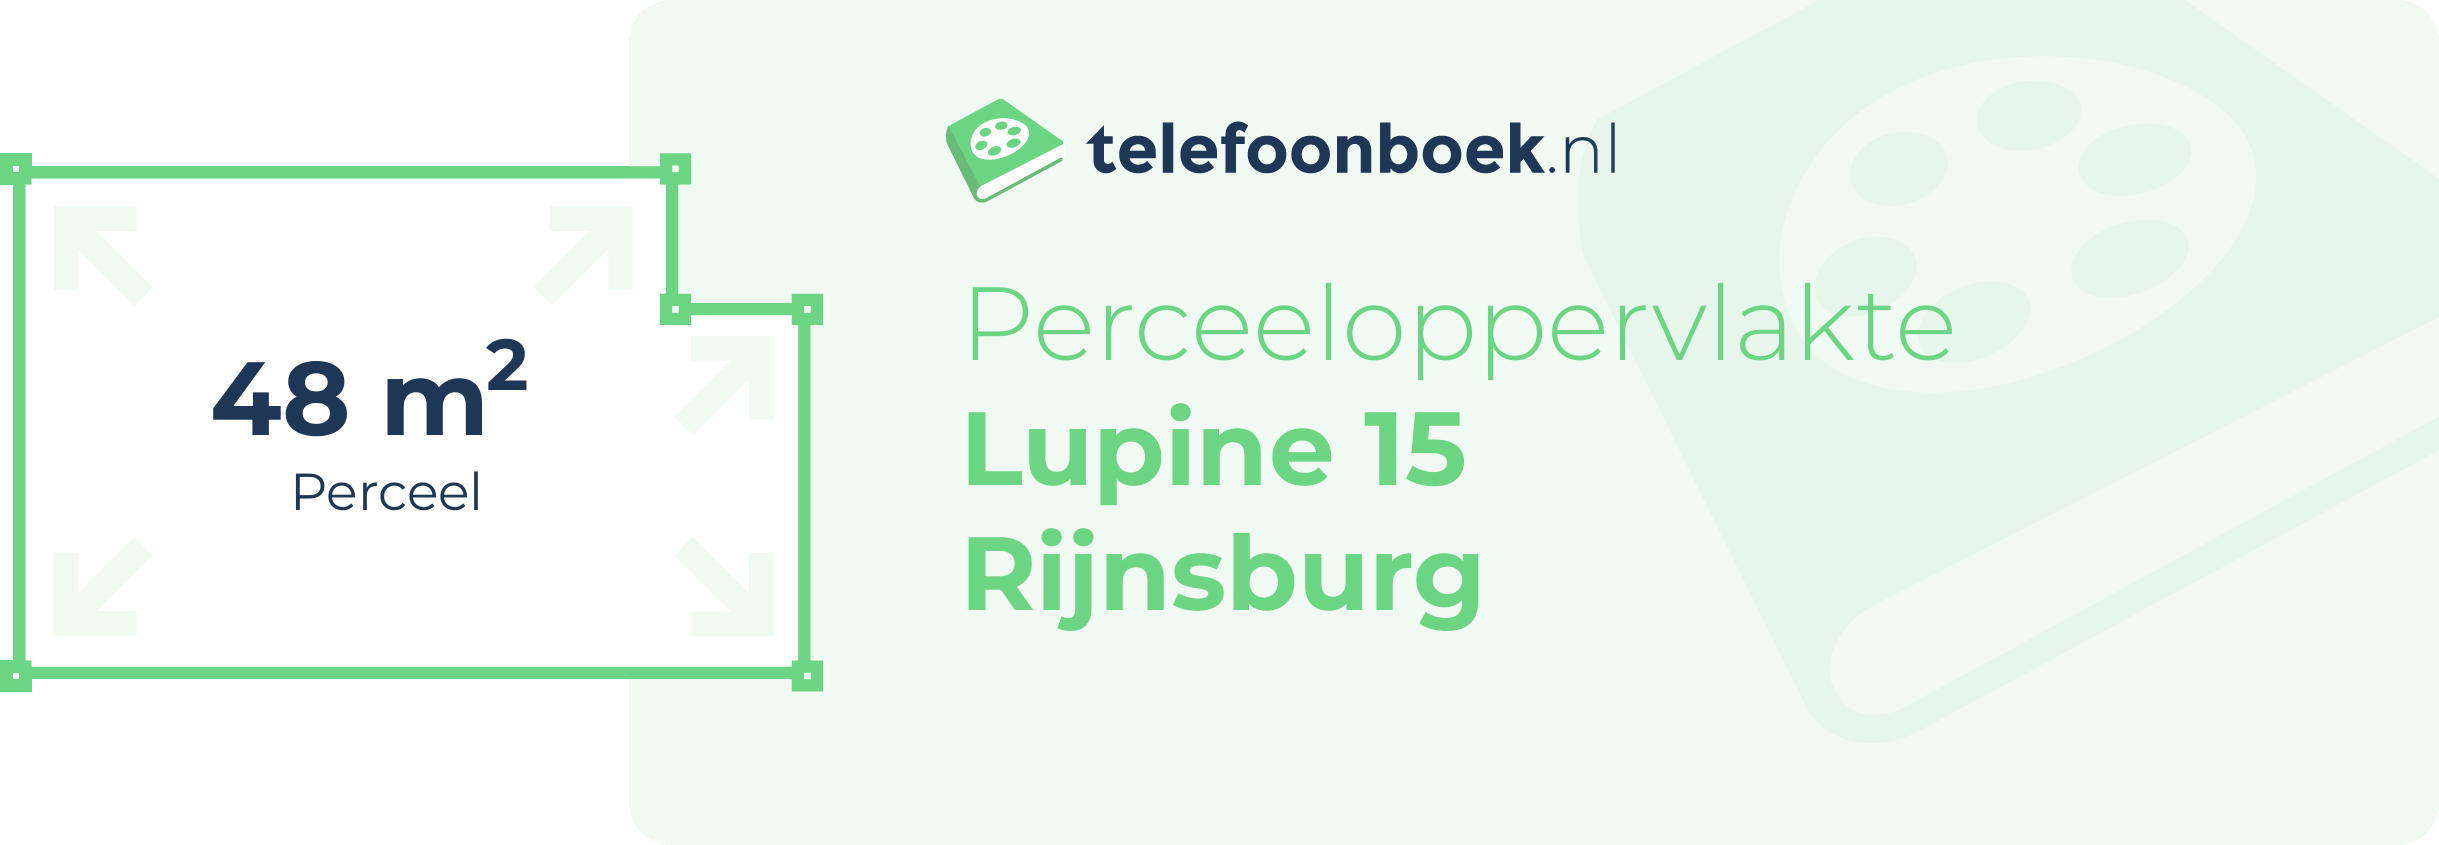 Perceeloppervlakte Lupine 15 Rijnsburg